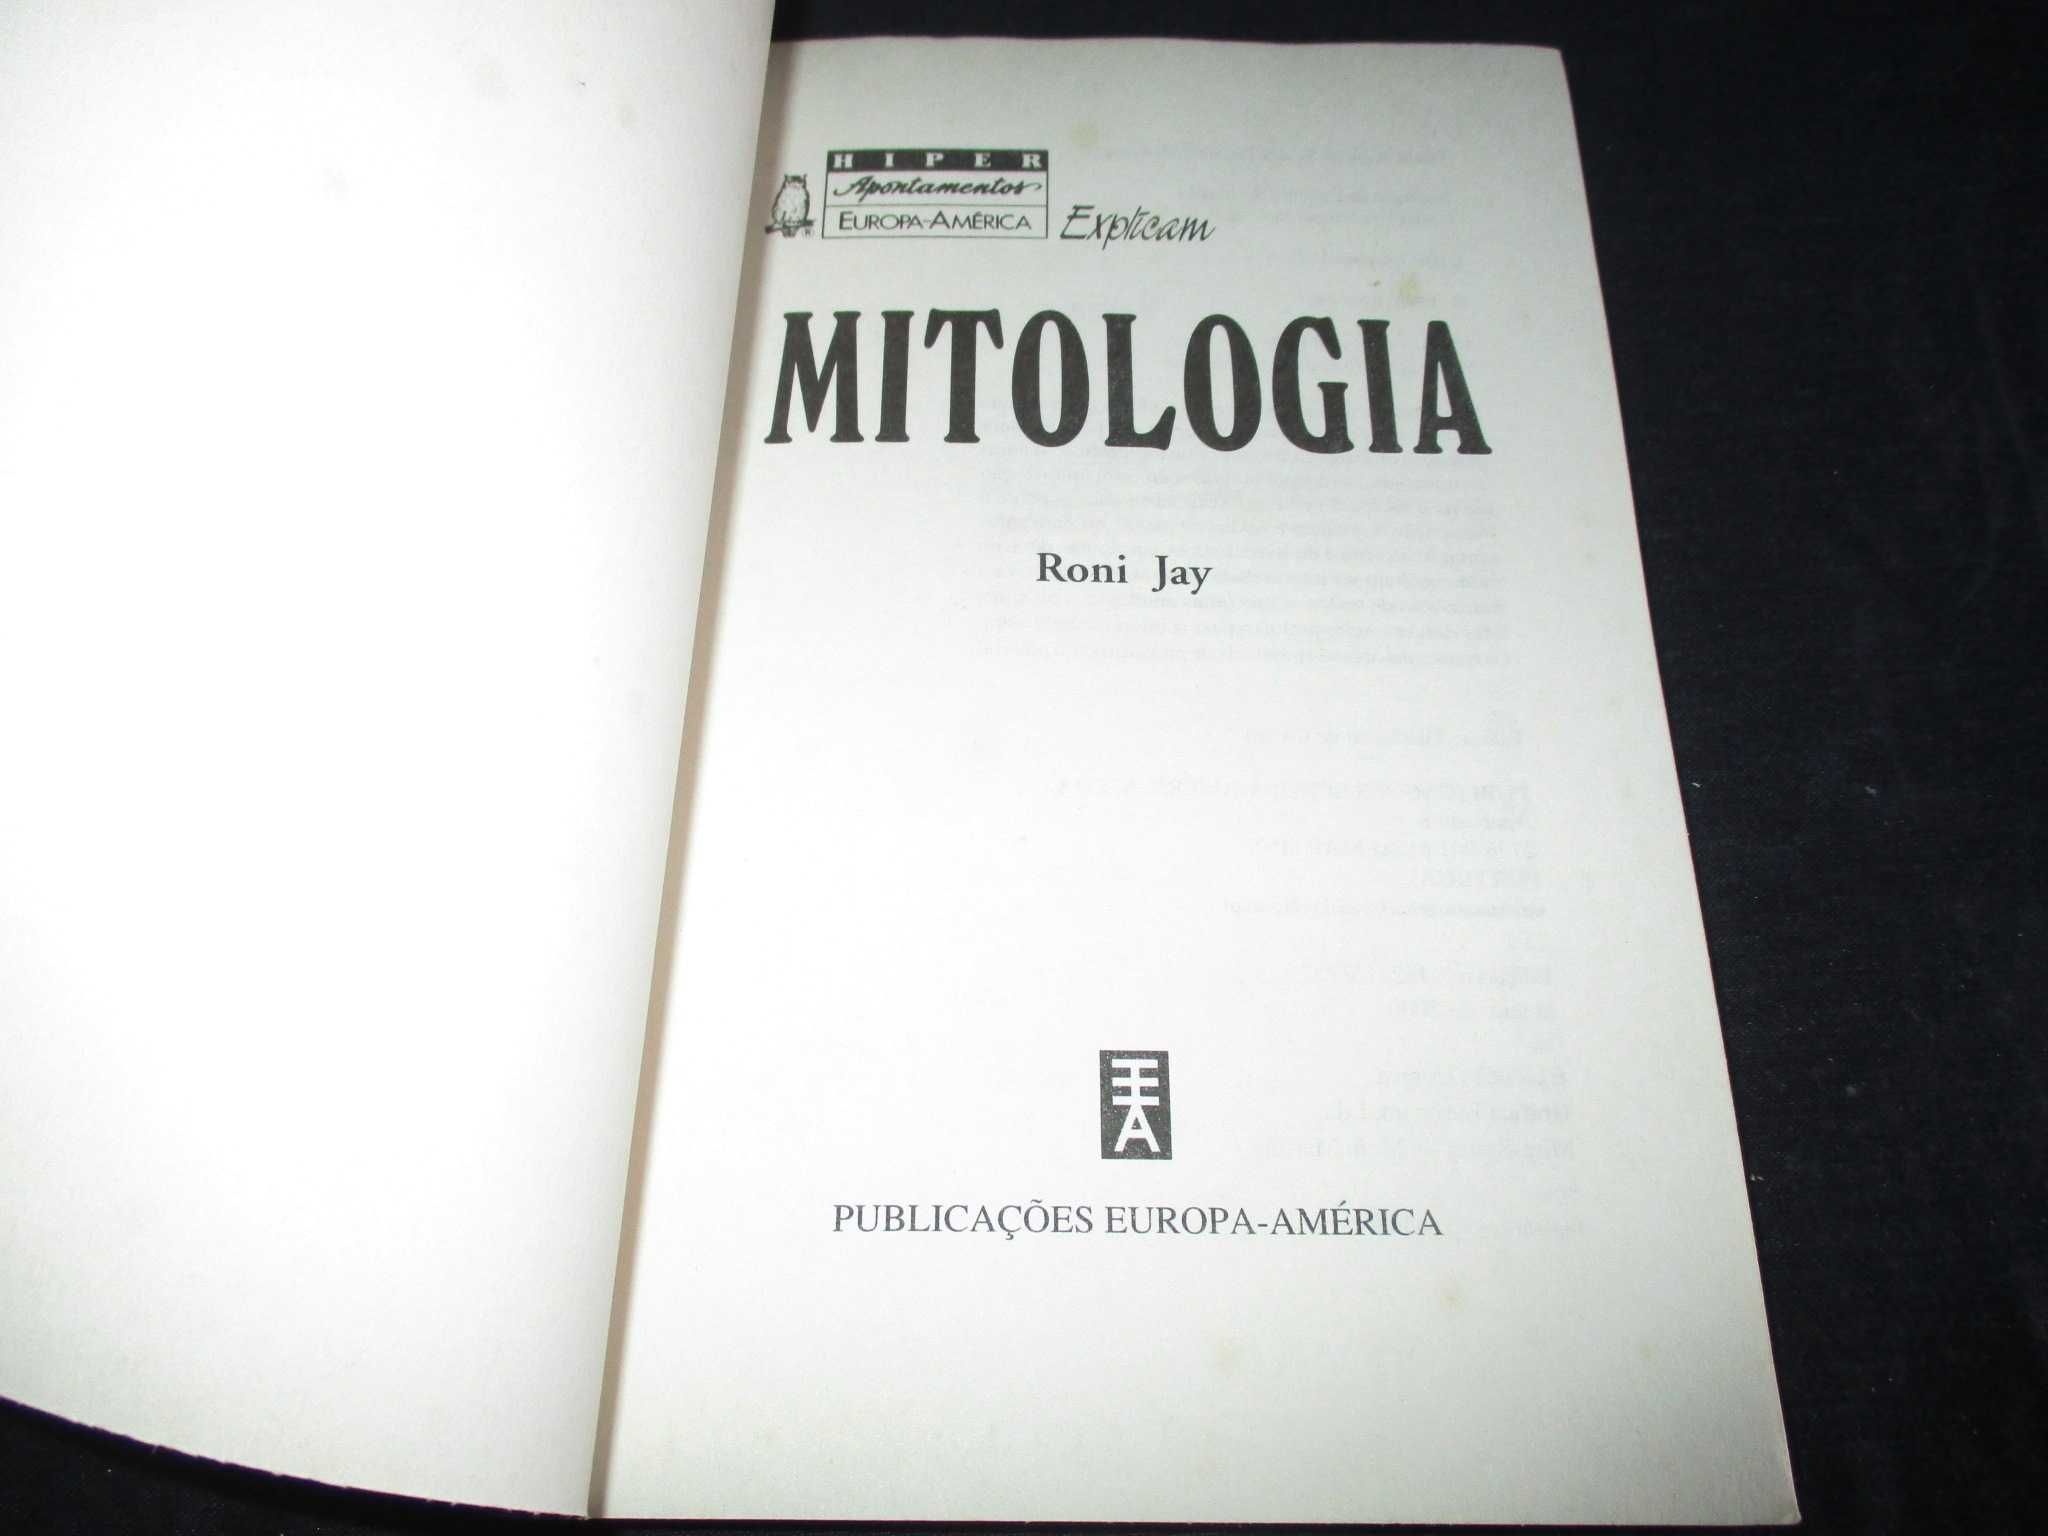 Livro Mitologia Roni Jay Apontamentos Europa-América